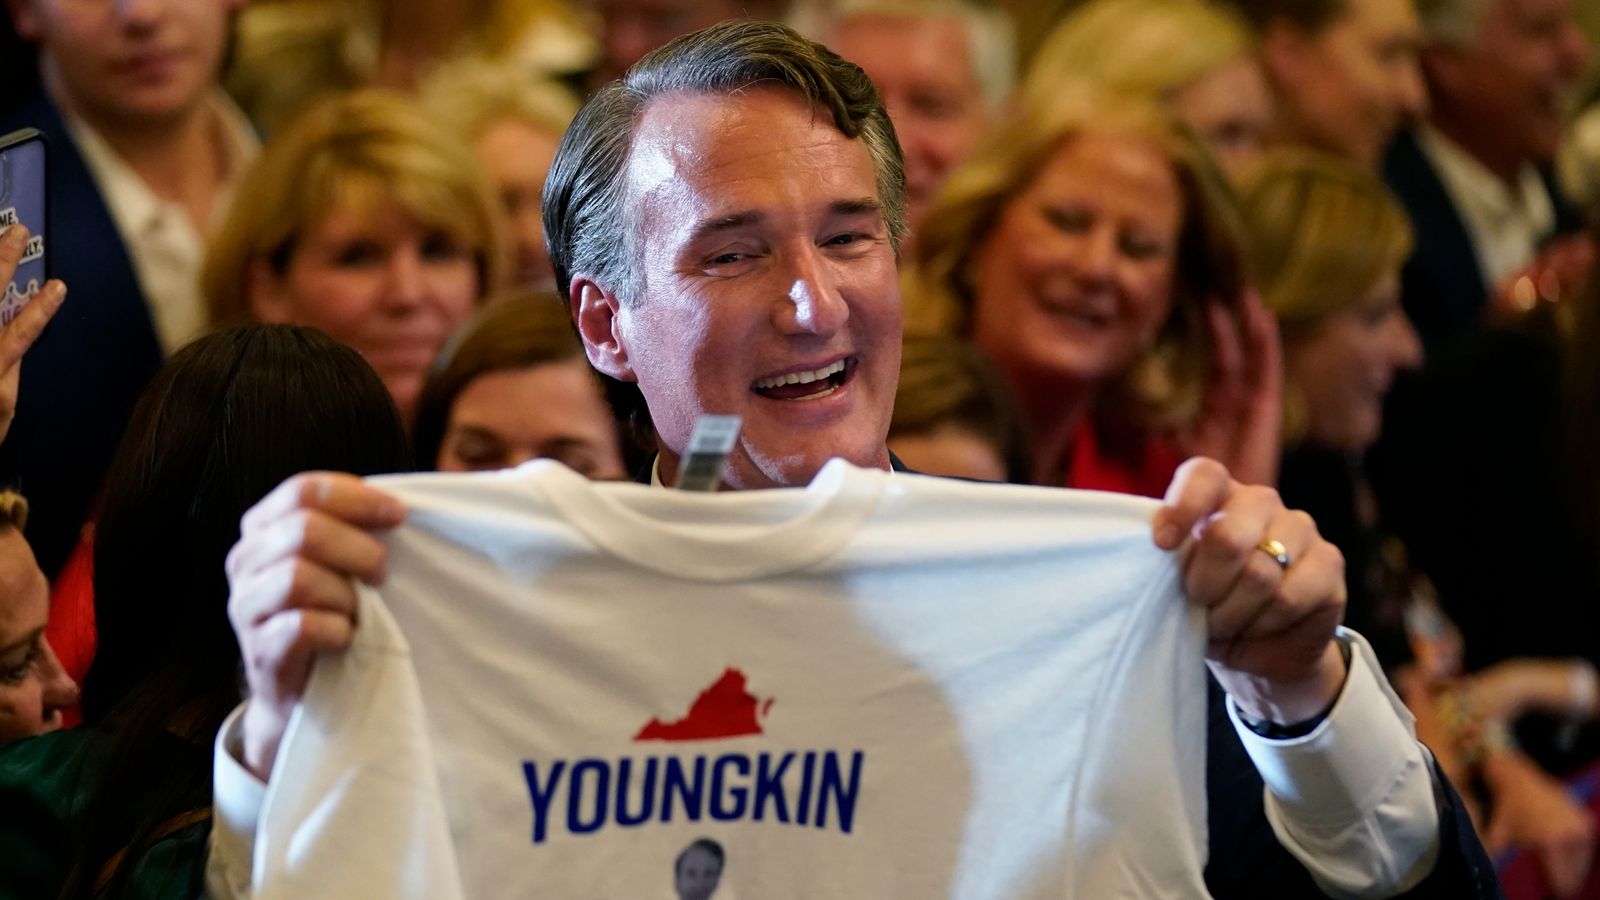 Glenn Youngkin dari Partai Republik menjadi gubernur baru Virginia yang mengejutkan karena perkiraan blues jangka menengah untuk Joe Biden |  Berita AS